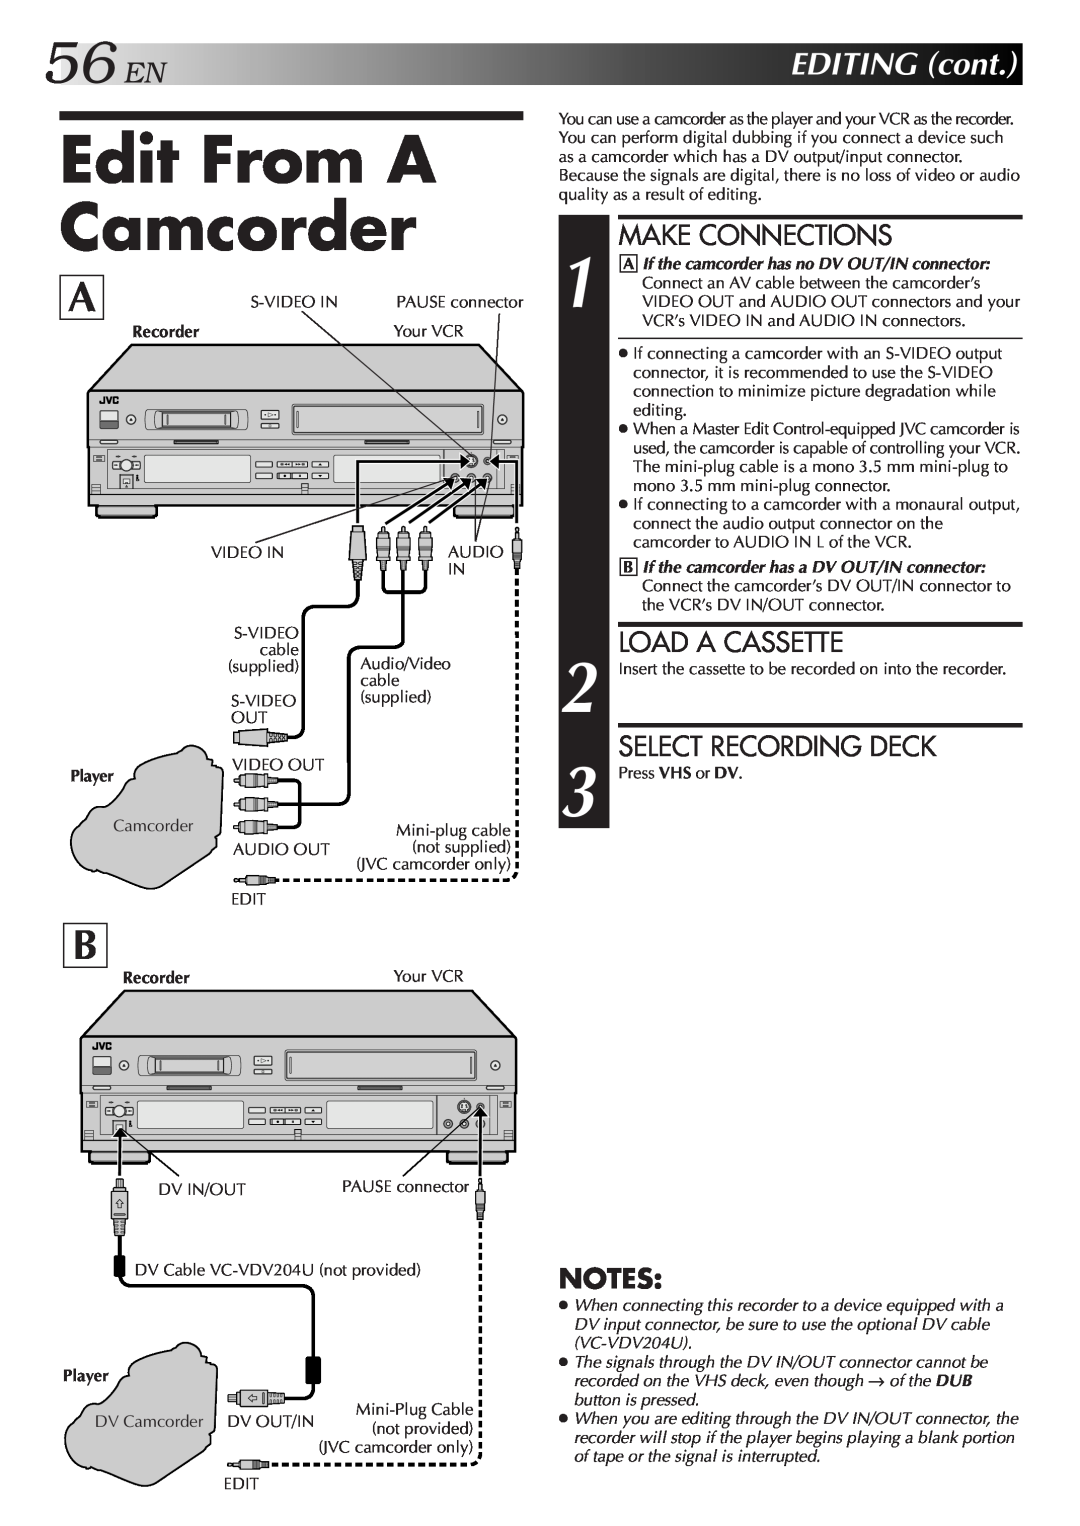 JVC SR-VS10U Edit From A Camcorder, 56EN, Make Connections, Load A Cassette, Select Recording Deck, EDITINGcont, Notes 